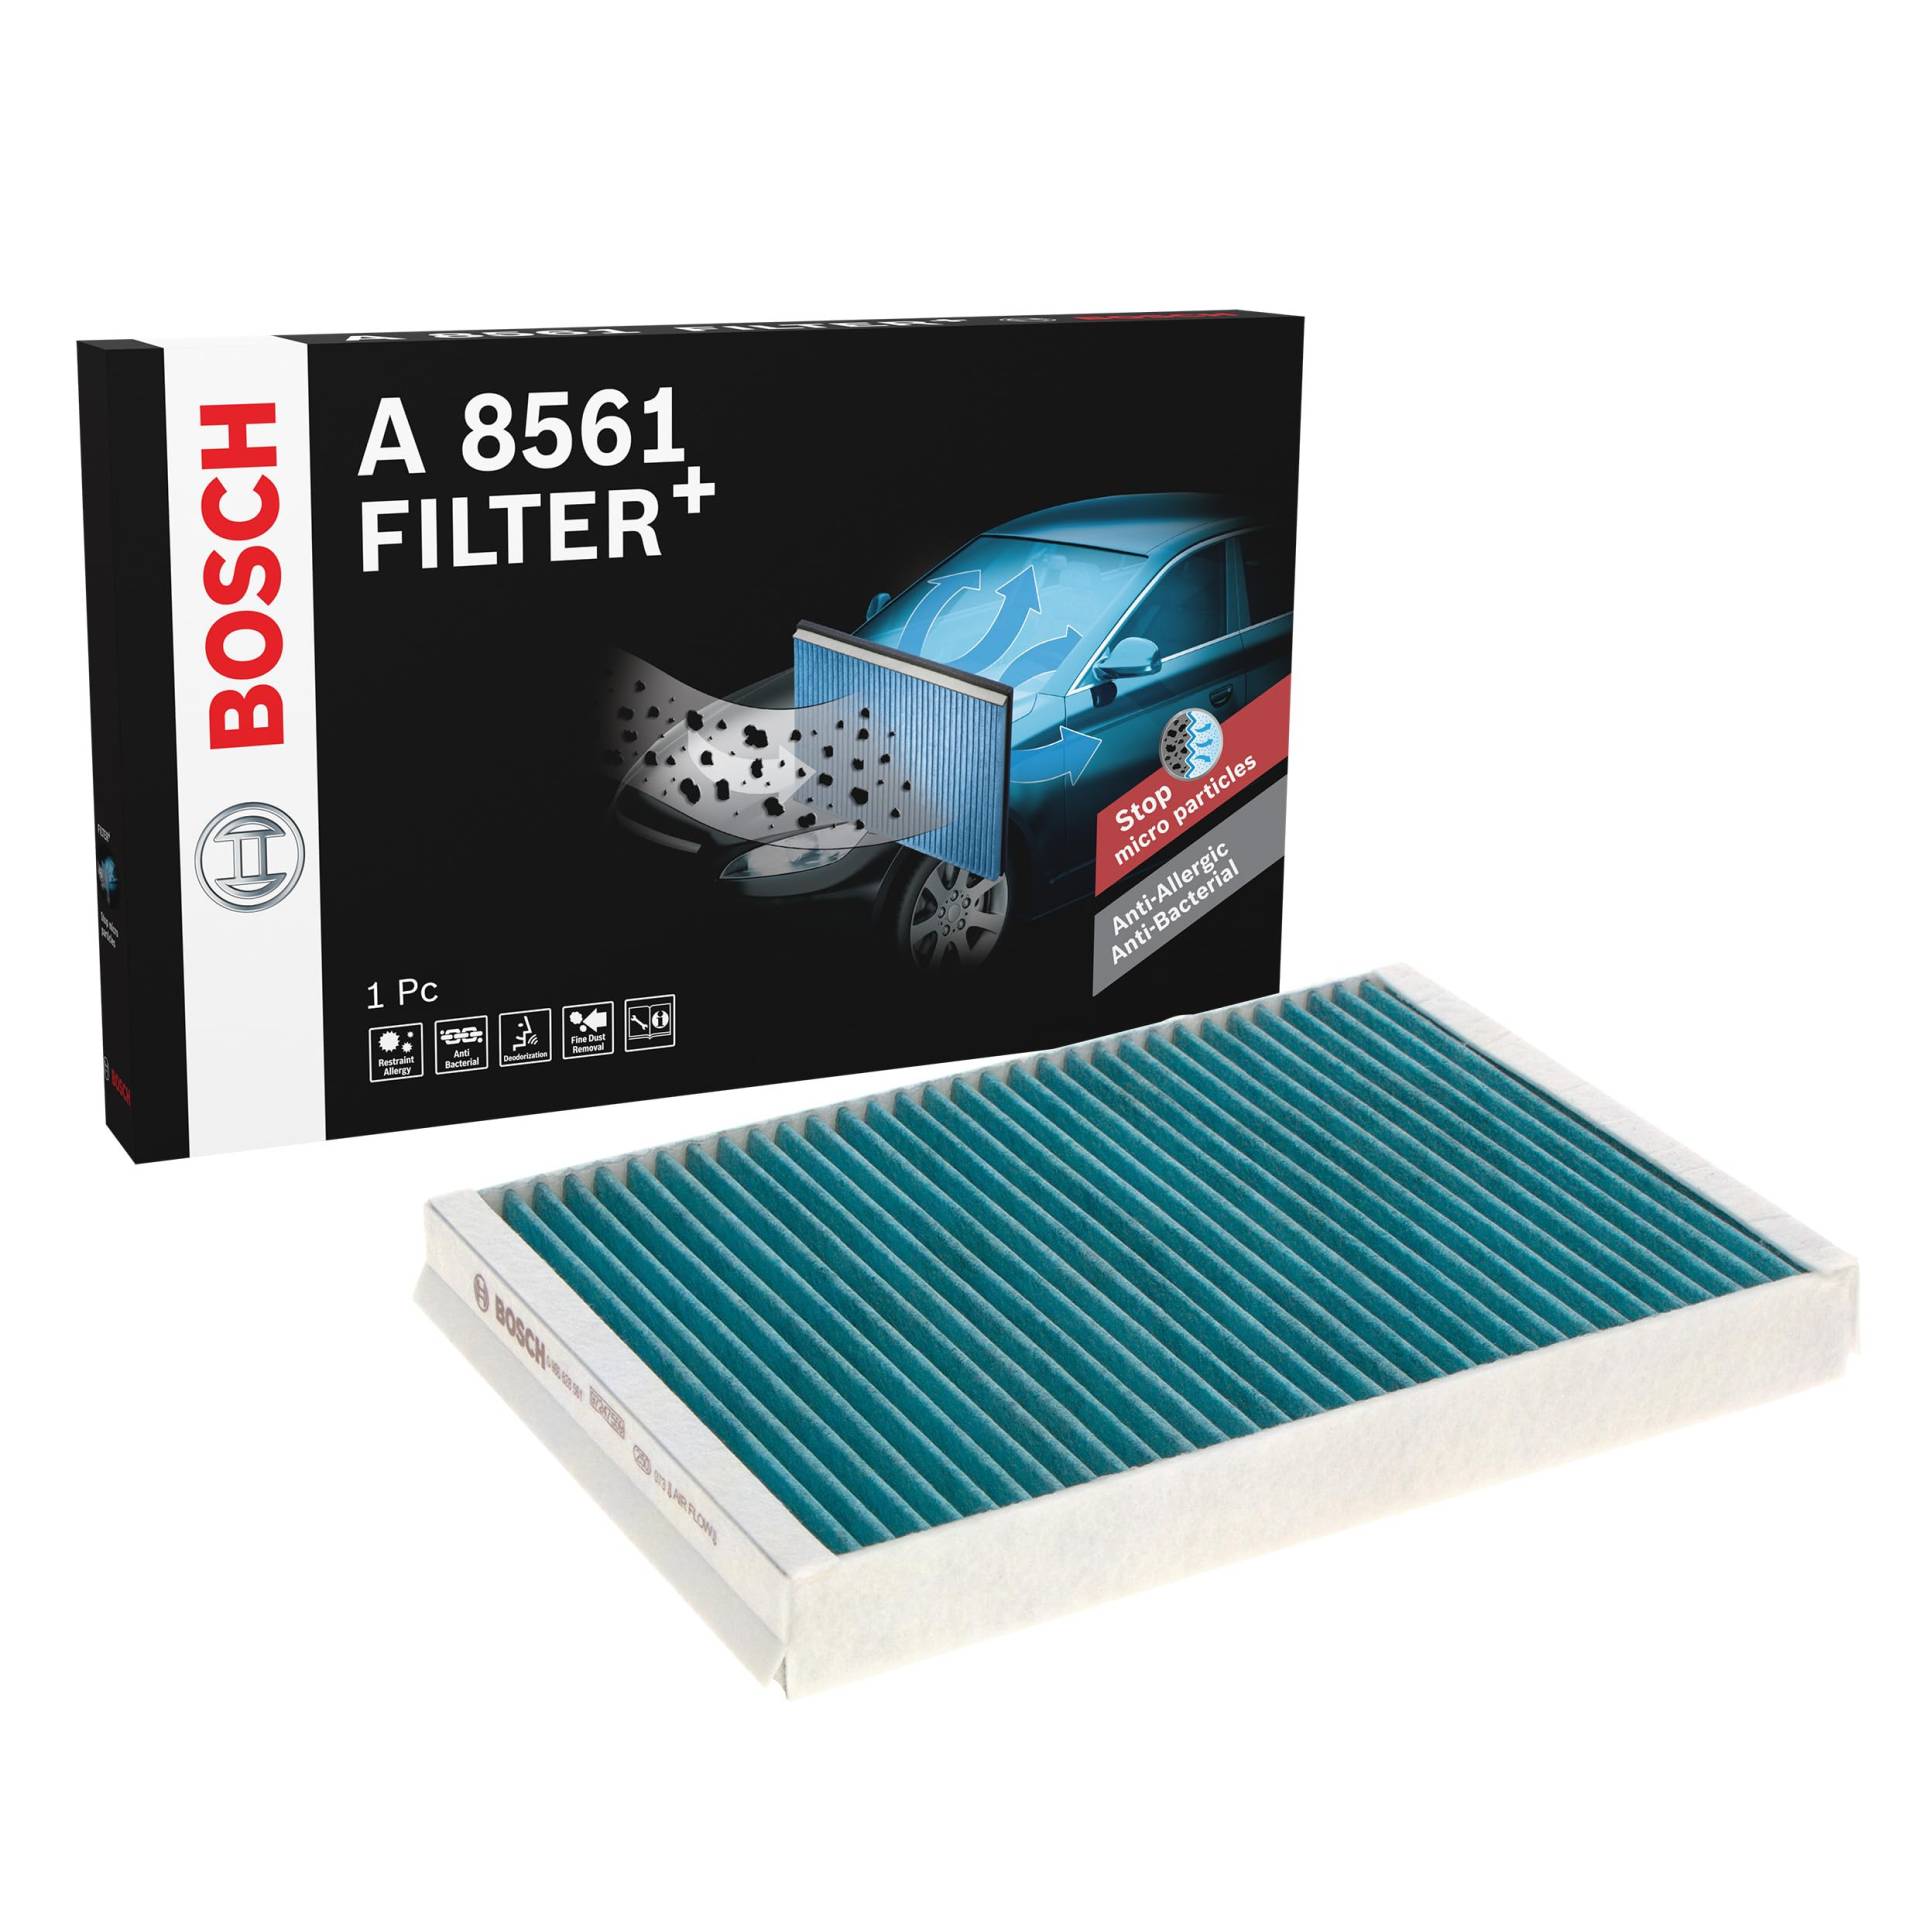 Bosch A8561 - Innenraumfilter Filter+ von Bosch Automotive